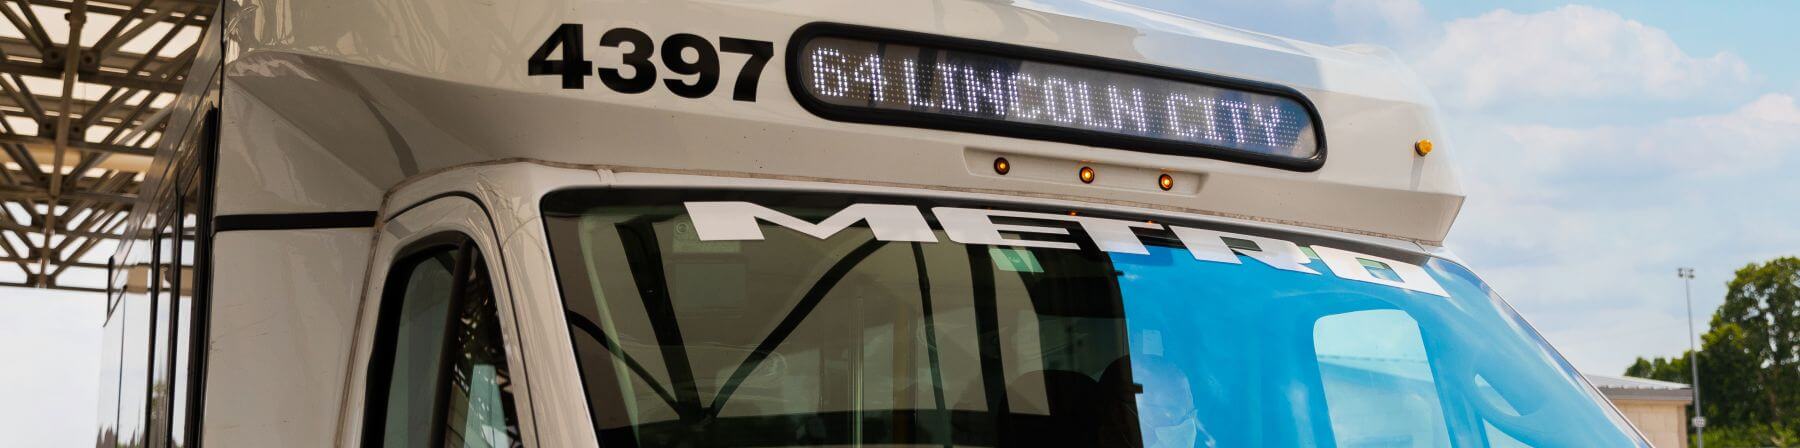 64 Lincoln City shuttle bus